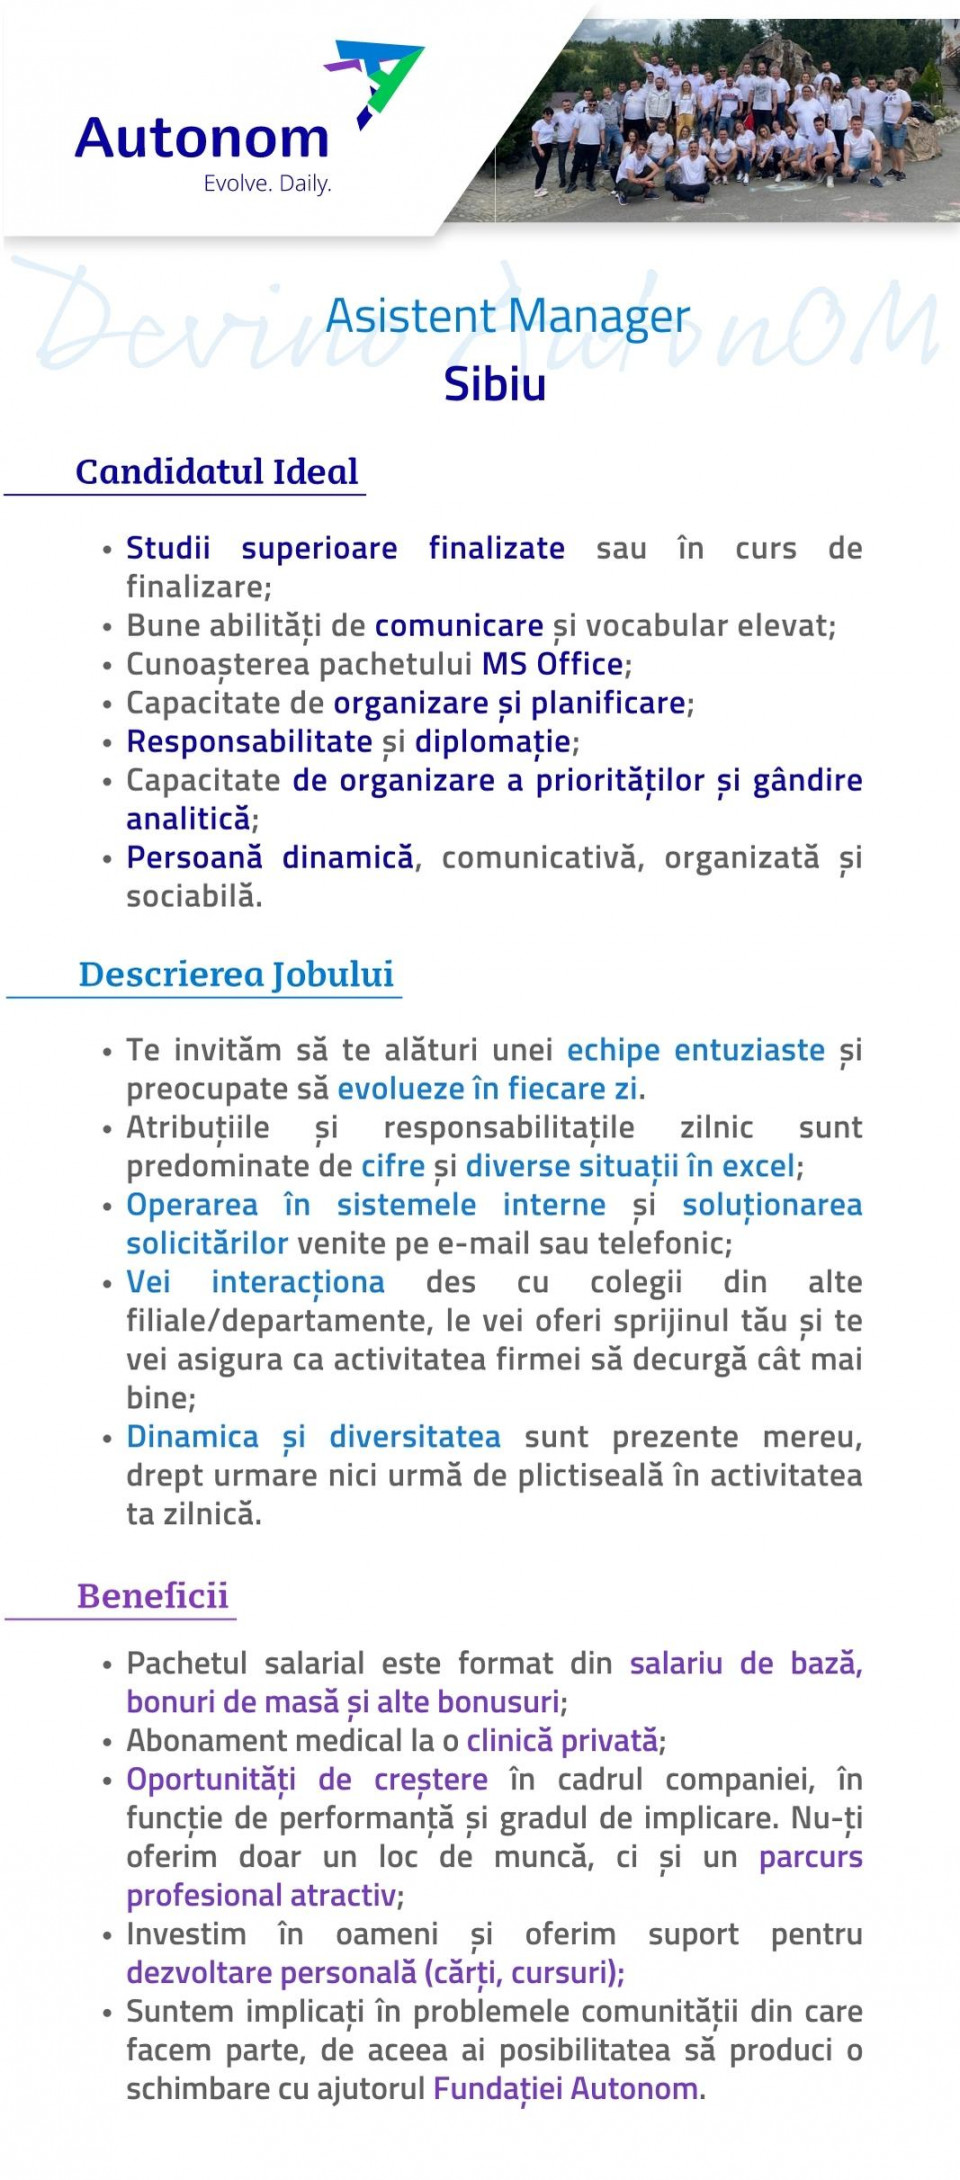 Asistent Manager - Sibiu